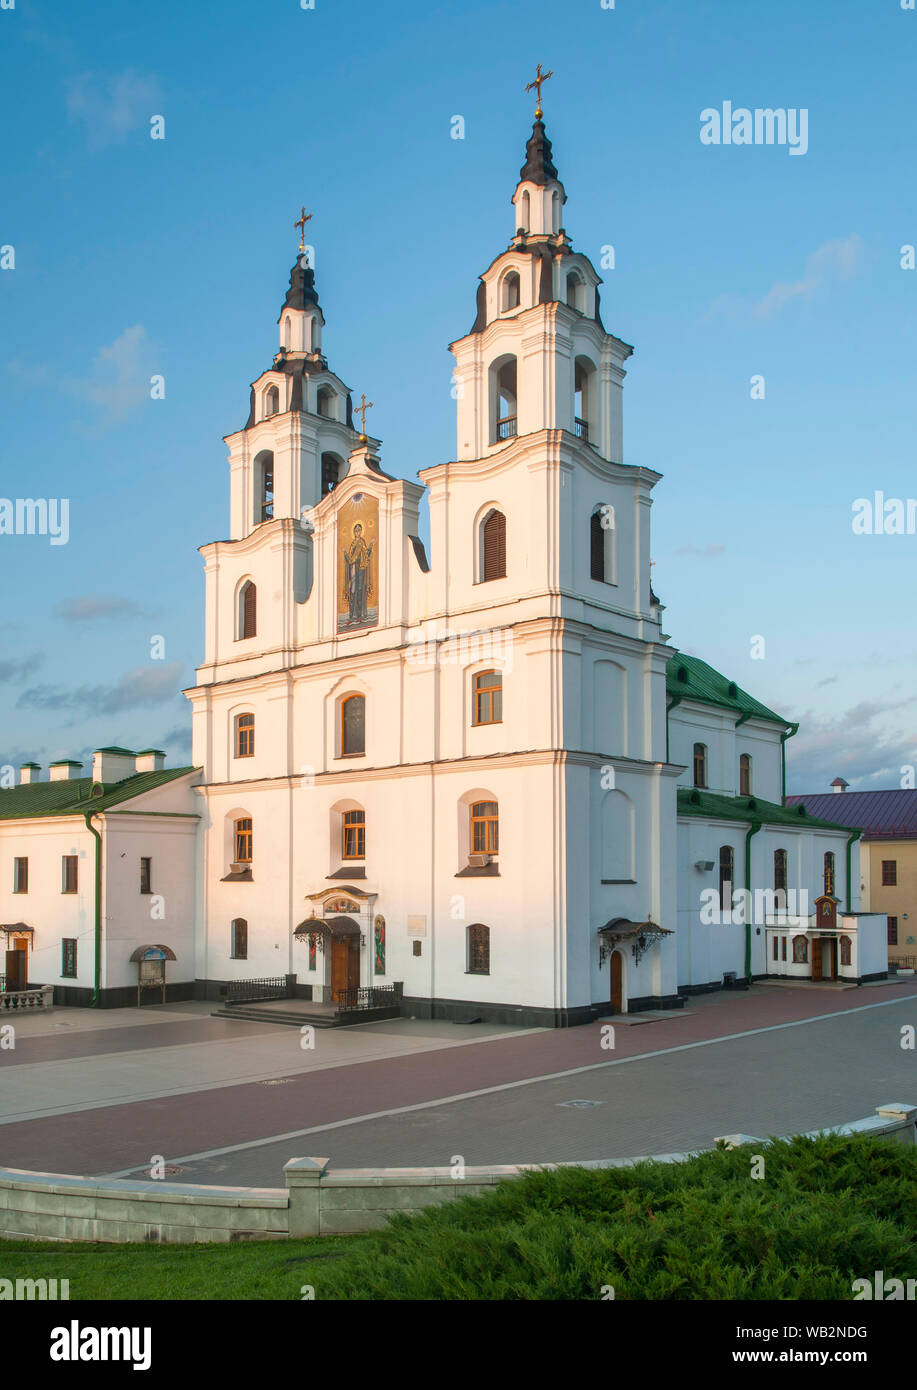 Der Heilige Geist Kathedrale in Minsk, Belarus. Stockfoto